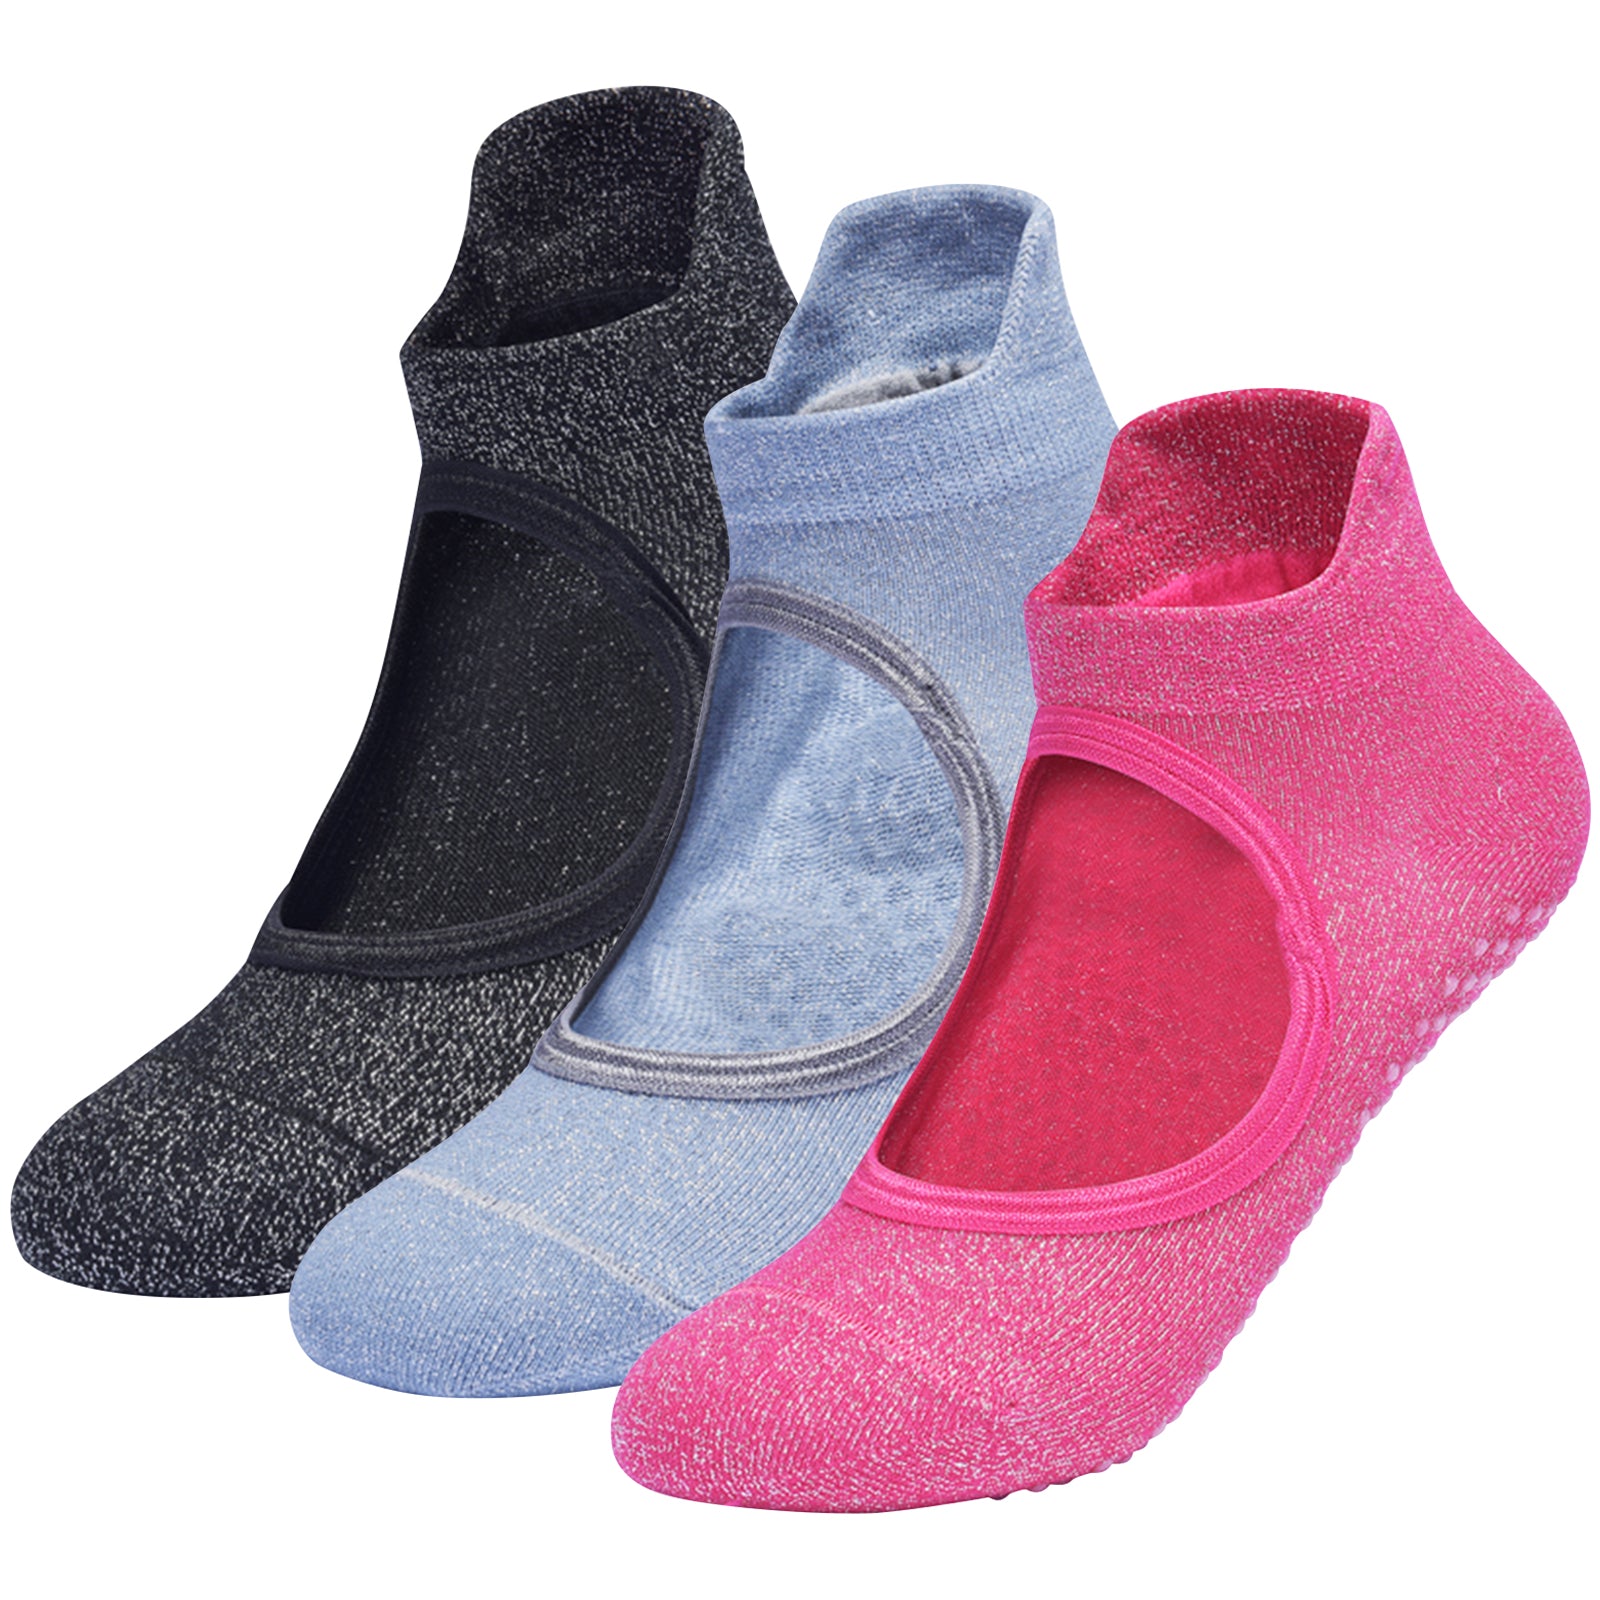 Artfasion's Women's Yoga Socks- Find your balance and comfort